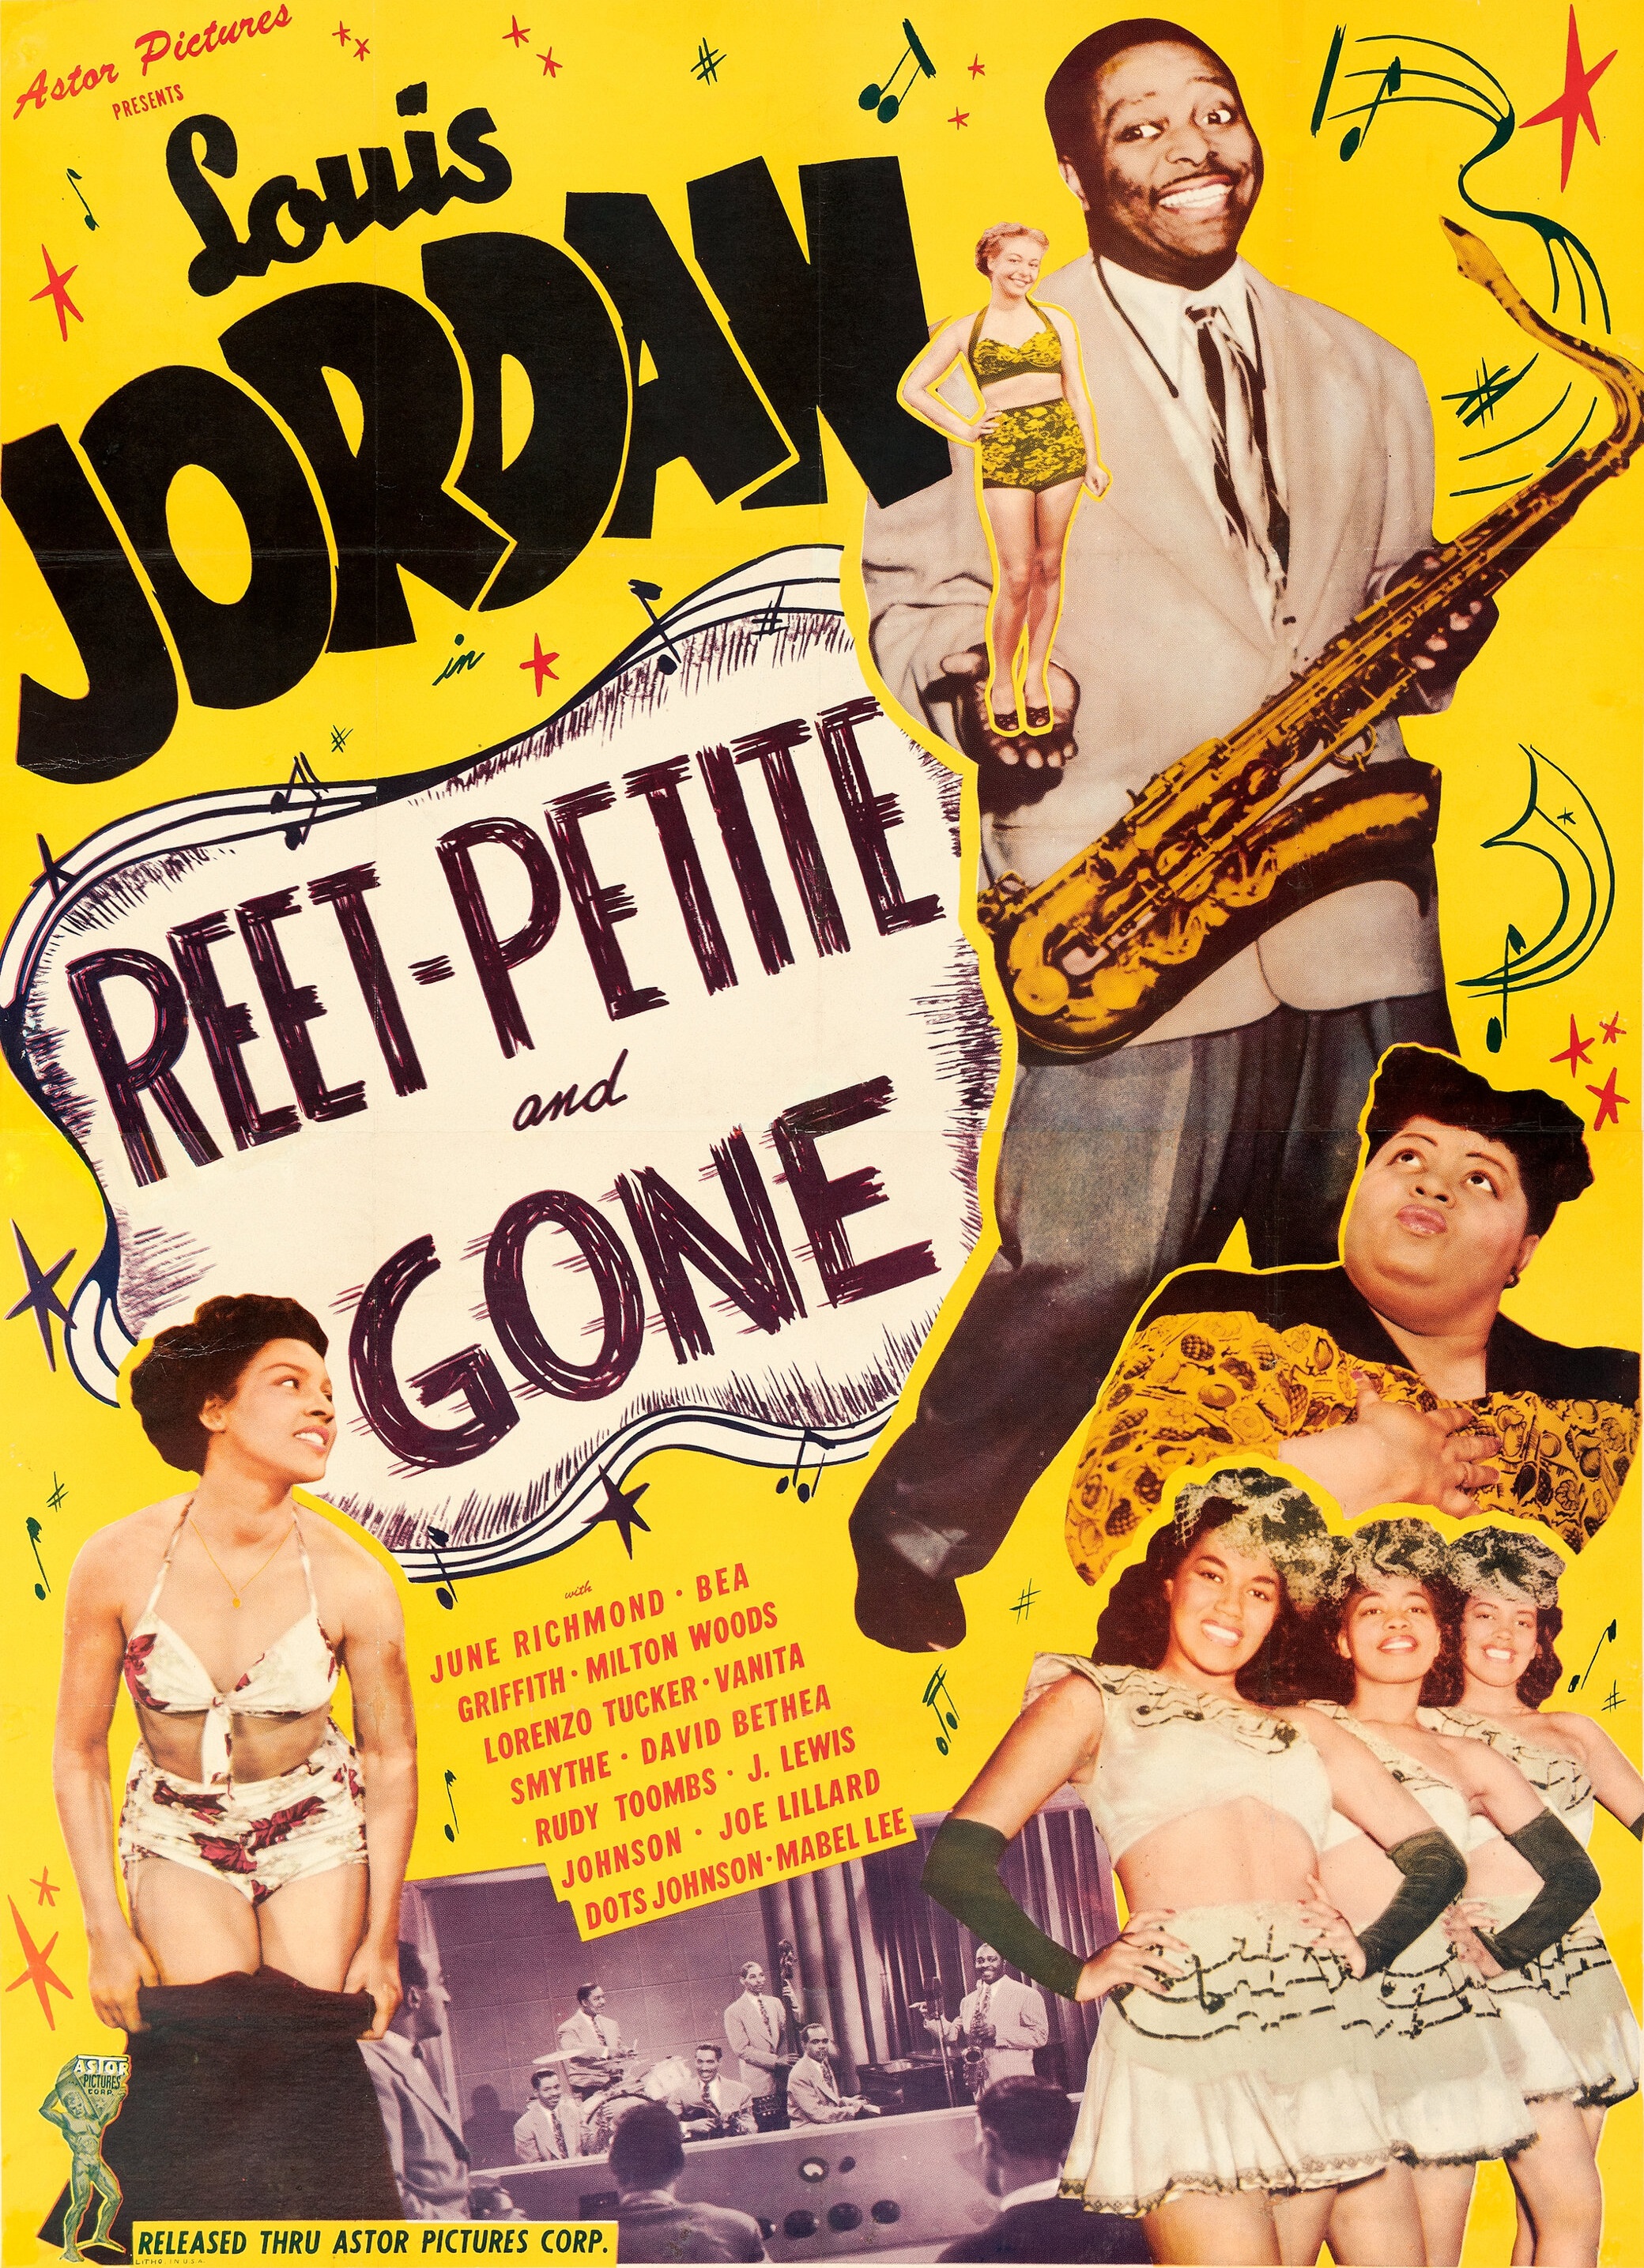 Reet, Petite, and Gone (1947) starring Louis Jordan on DVD on DVD